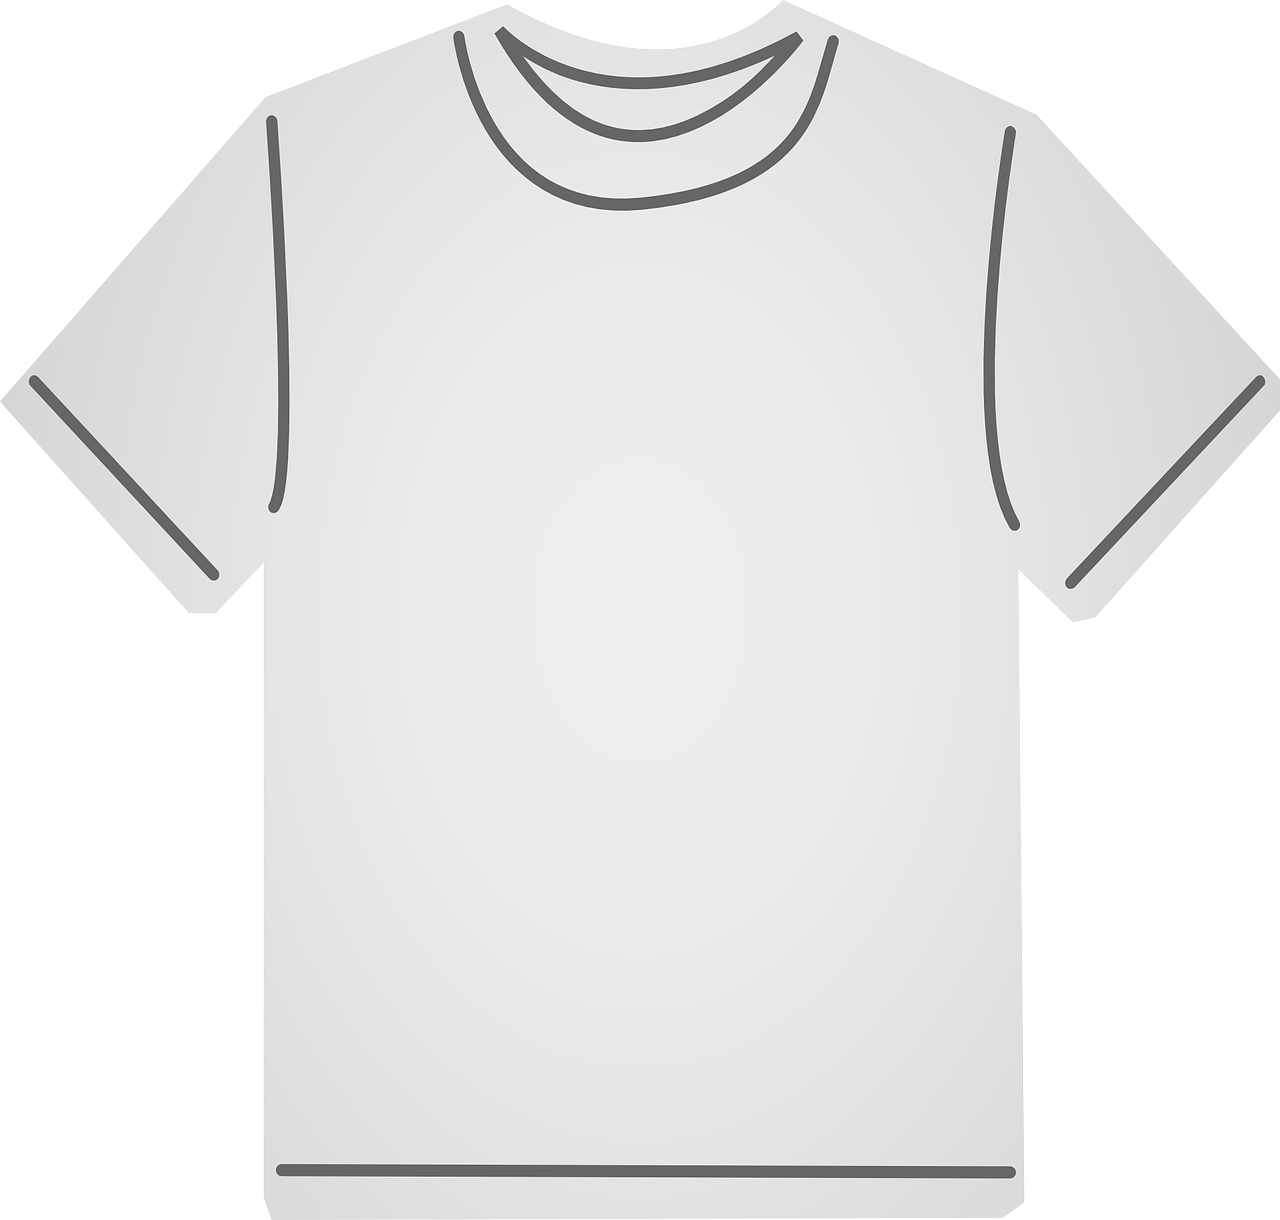 t-shirt white clothes free photo